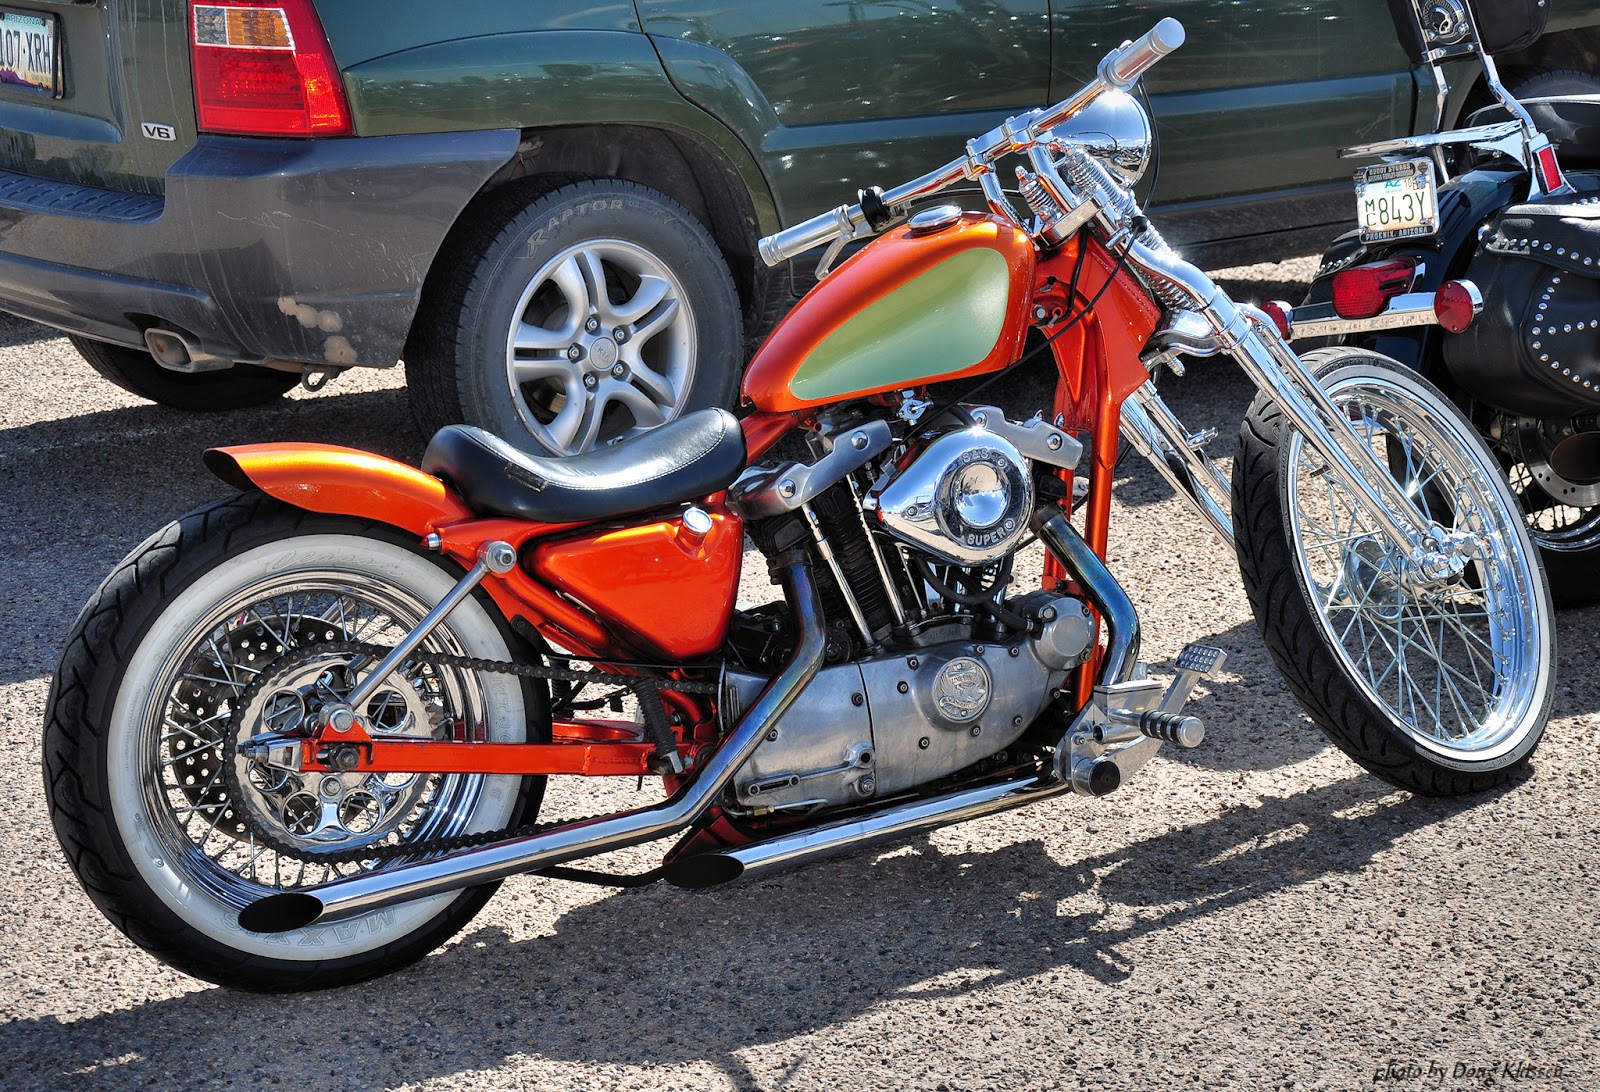 ihot Kawasaki vulcan 1500 bobber kits - Motorcycle Pictures